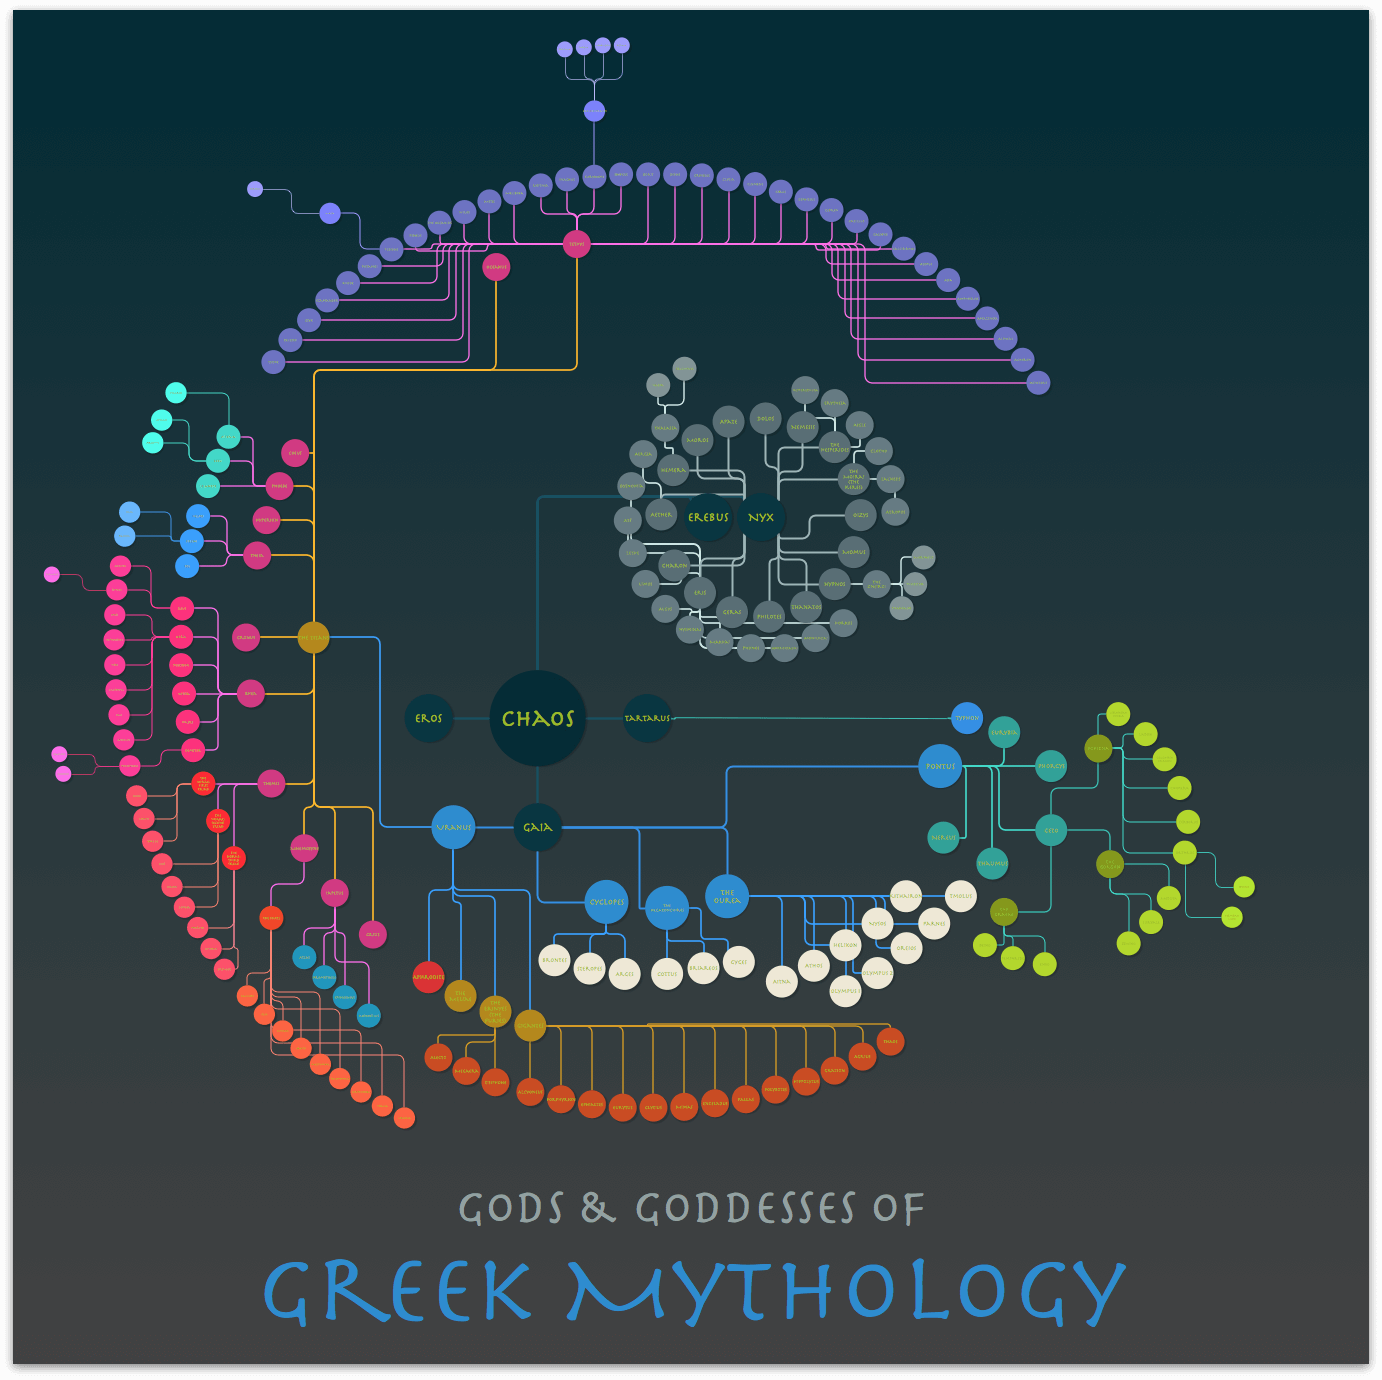 The Gods & Goddesses of Greek Mythology